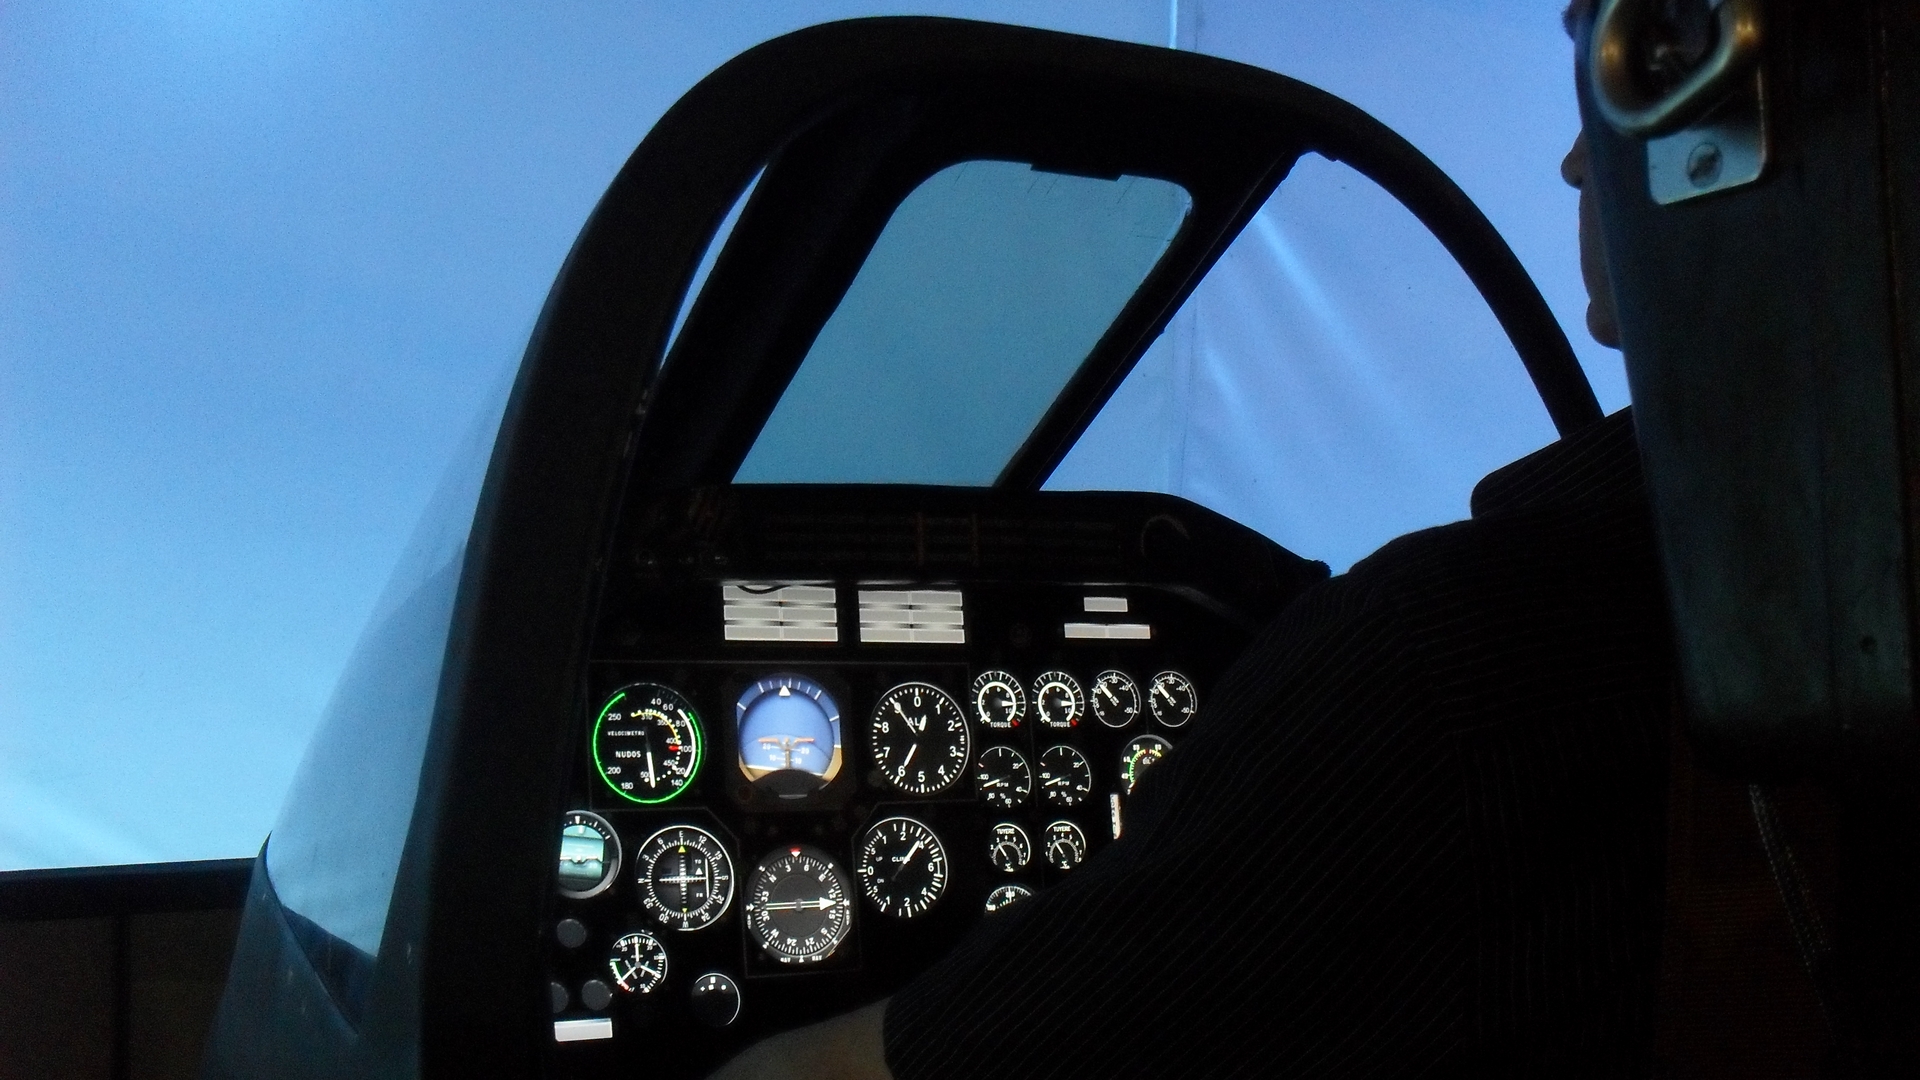 IA-58 Pucará flight simulator's cockpit